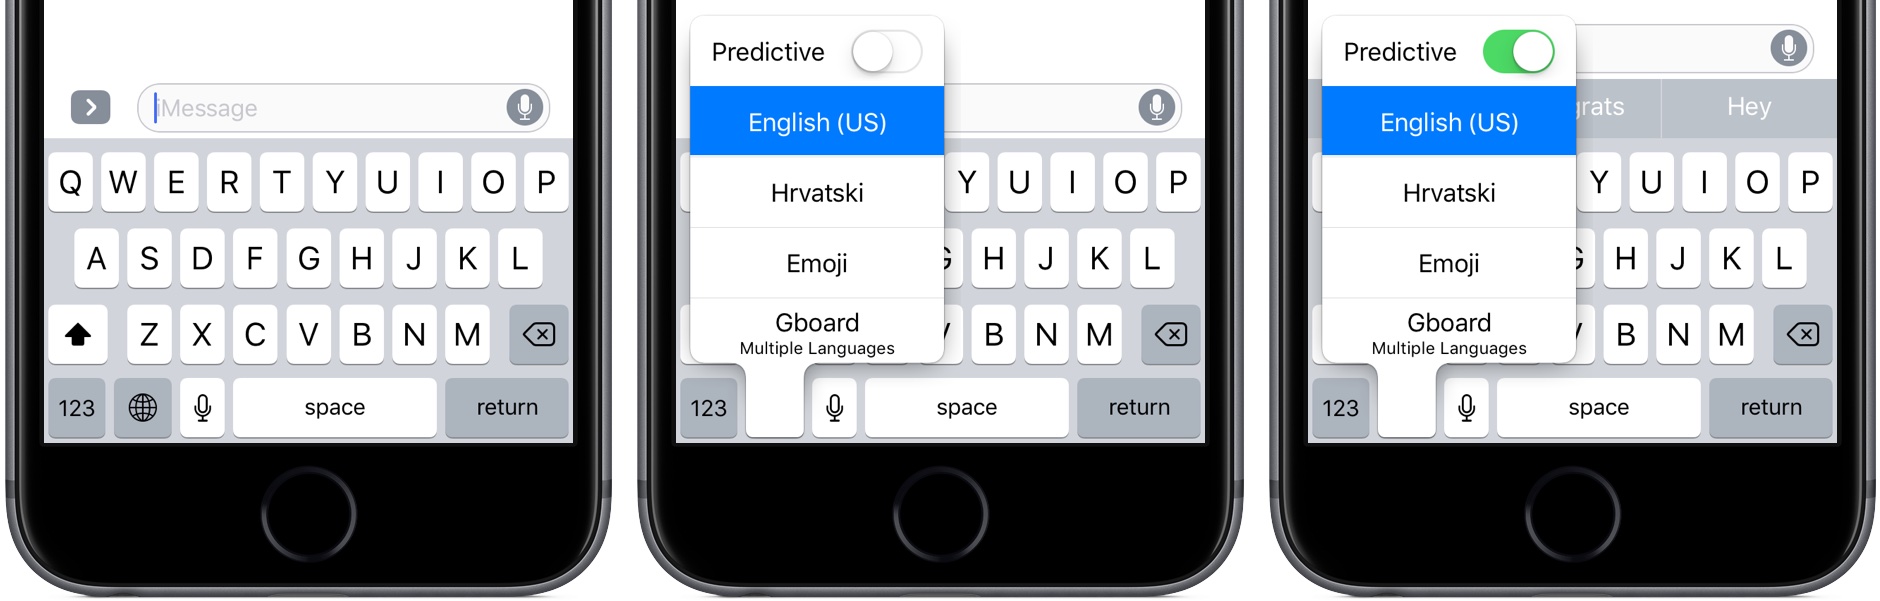 iOS 10 QuickType Predictive space gray iPhone screenshot 001